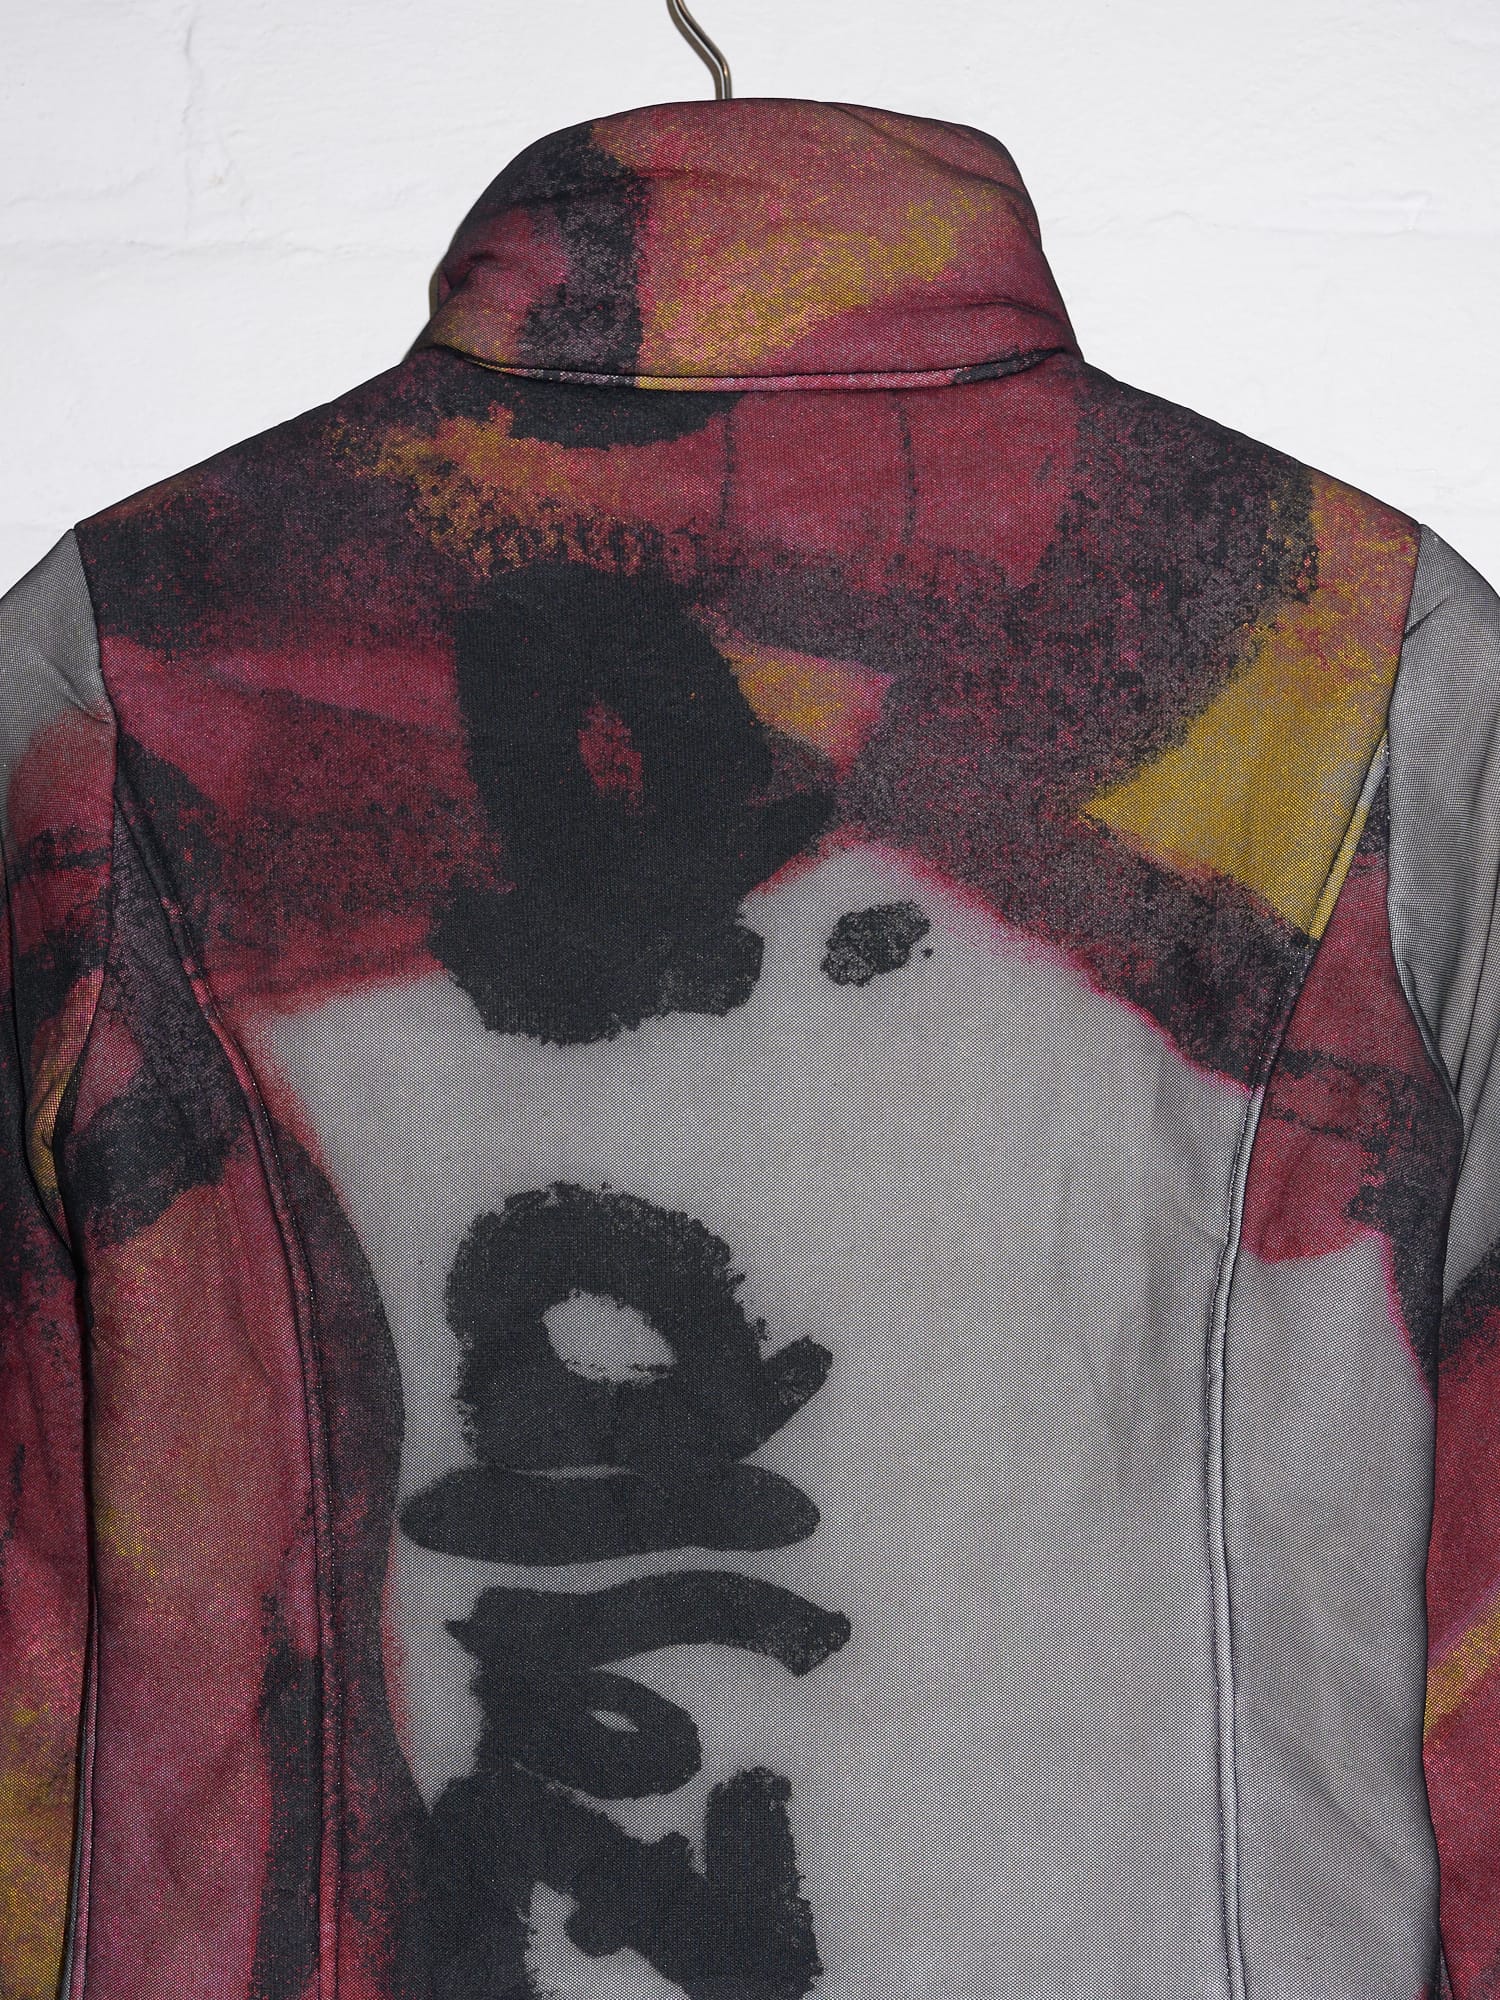 Y + contact by masafumi yoshikawa puffy multicolour ‘spray paint’ jacket sample